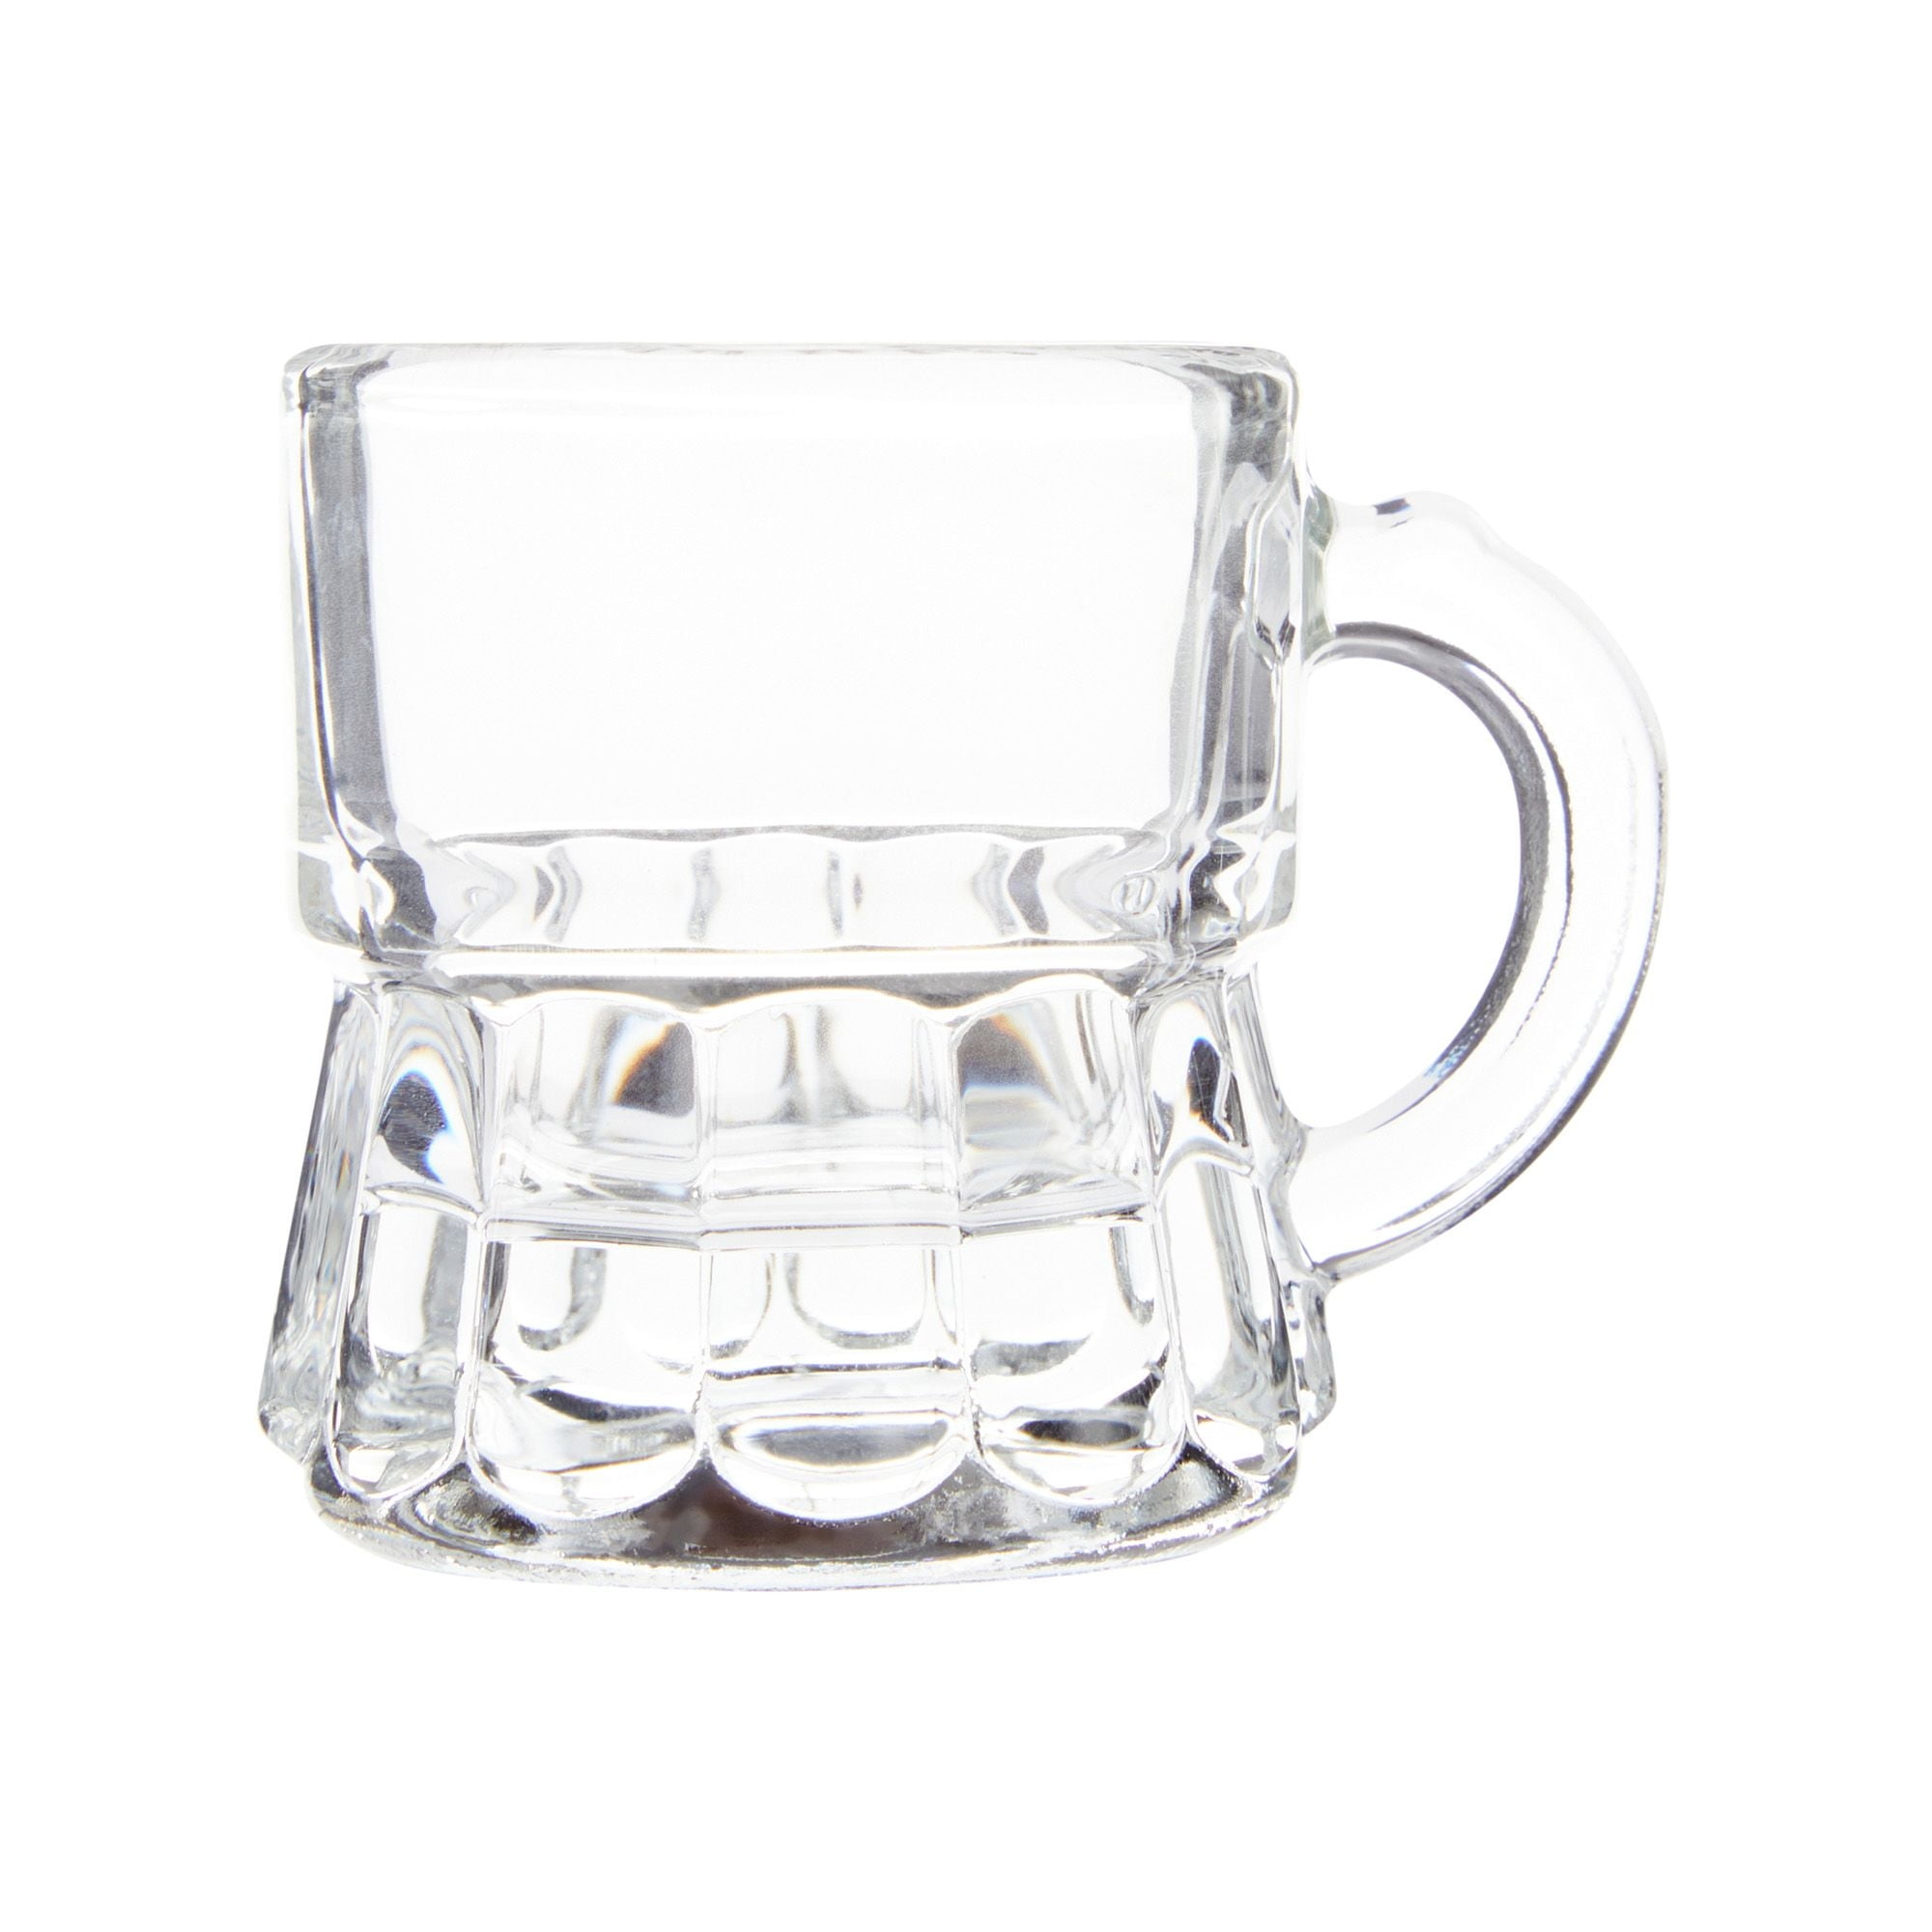 Irrmshr 30 Pcs Mini Plastic Beer Mugs,1 oz Clear Plastic Beer Glasses,Shot  Glasses with Handles,Reus…See more Irrmshr 30 Pcs Mini Plastic Beer Mugs,1